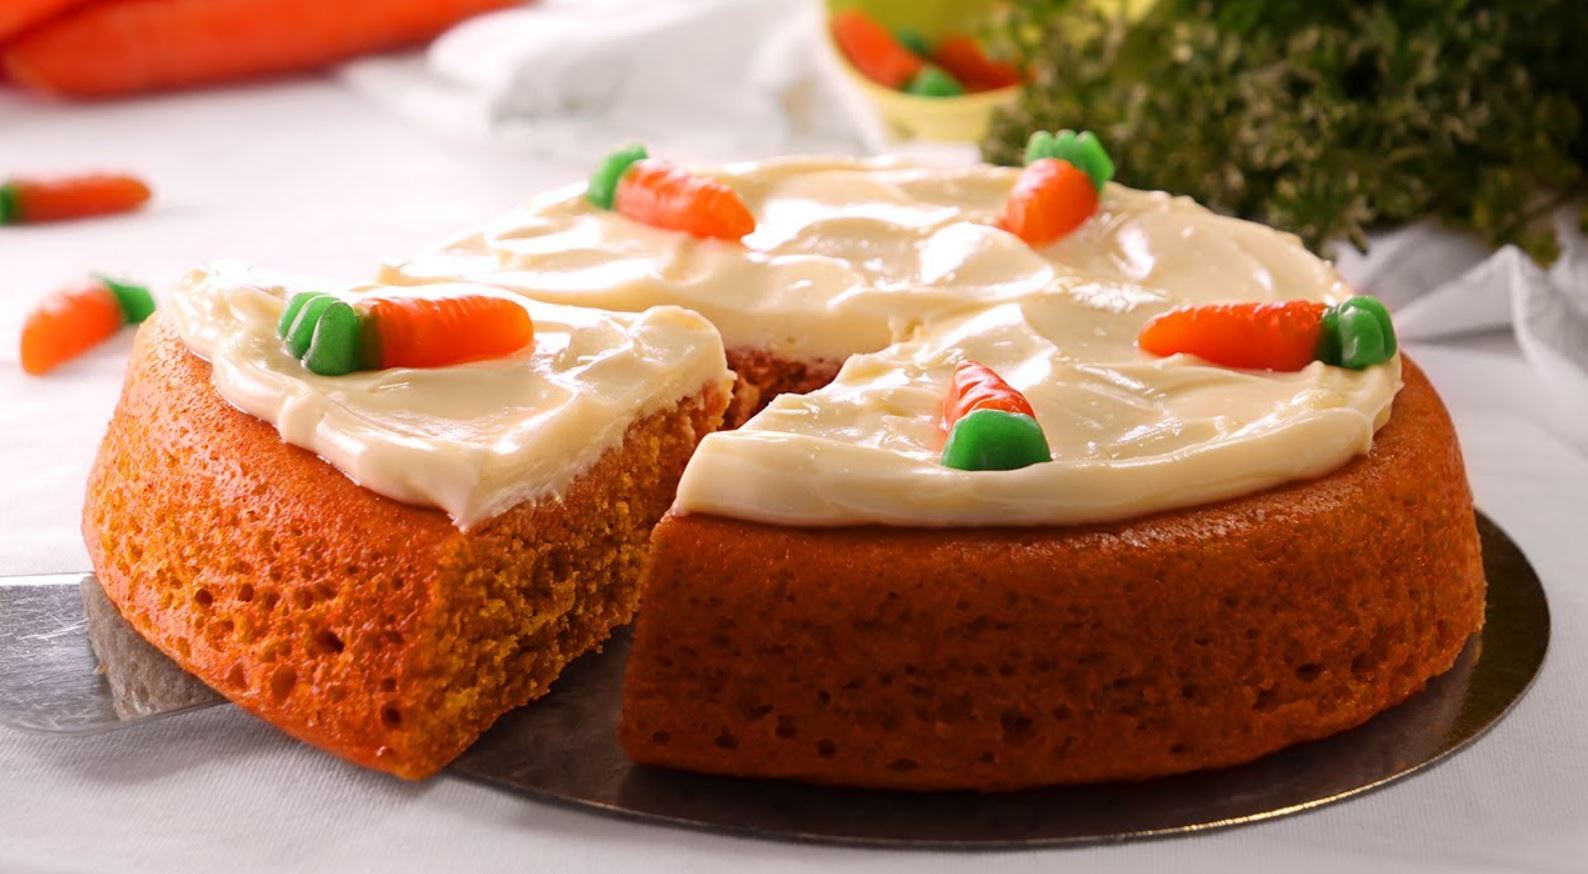 Eggless Carrot Cake Recipe